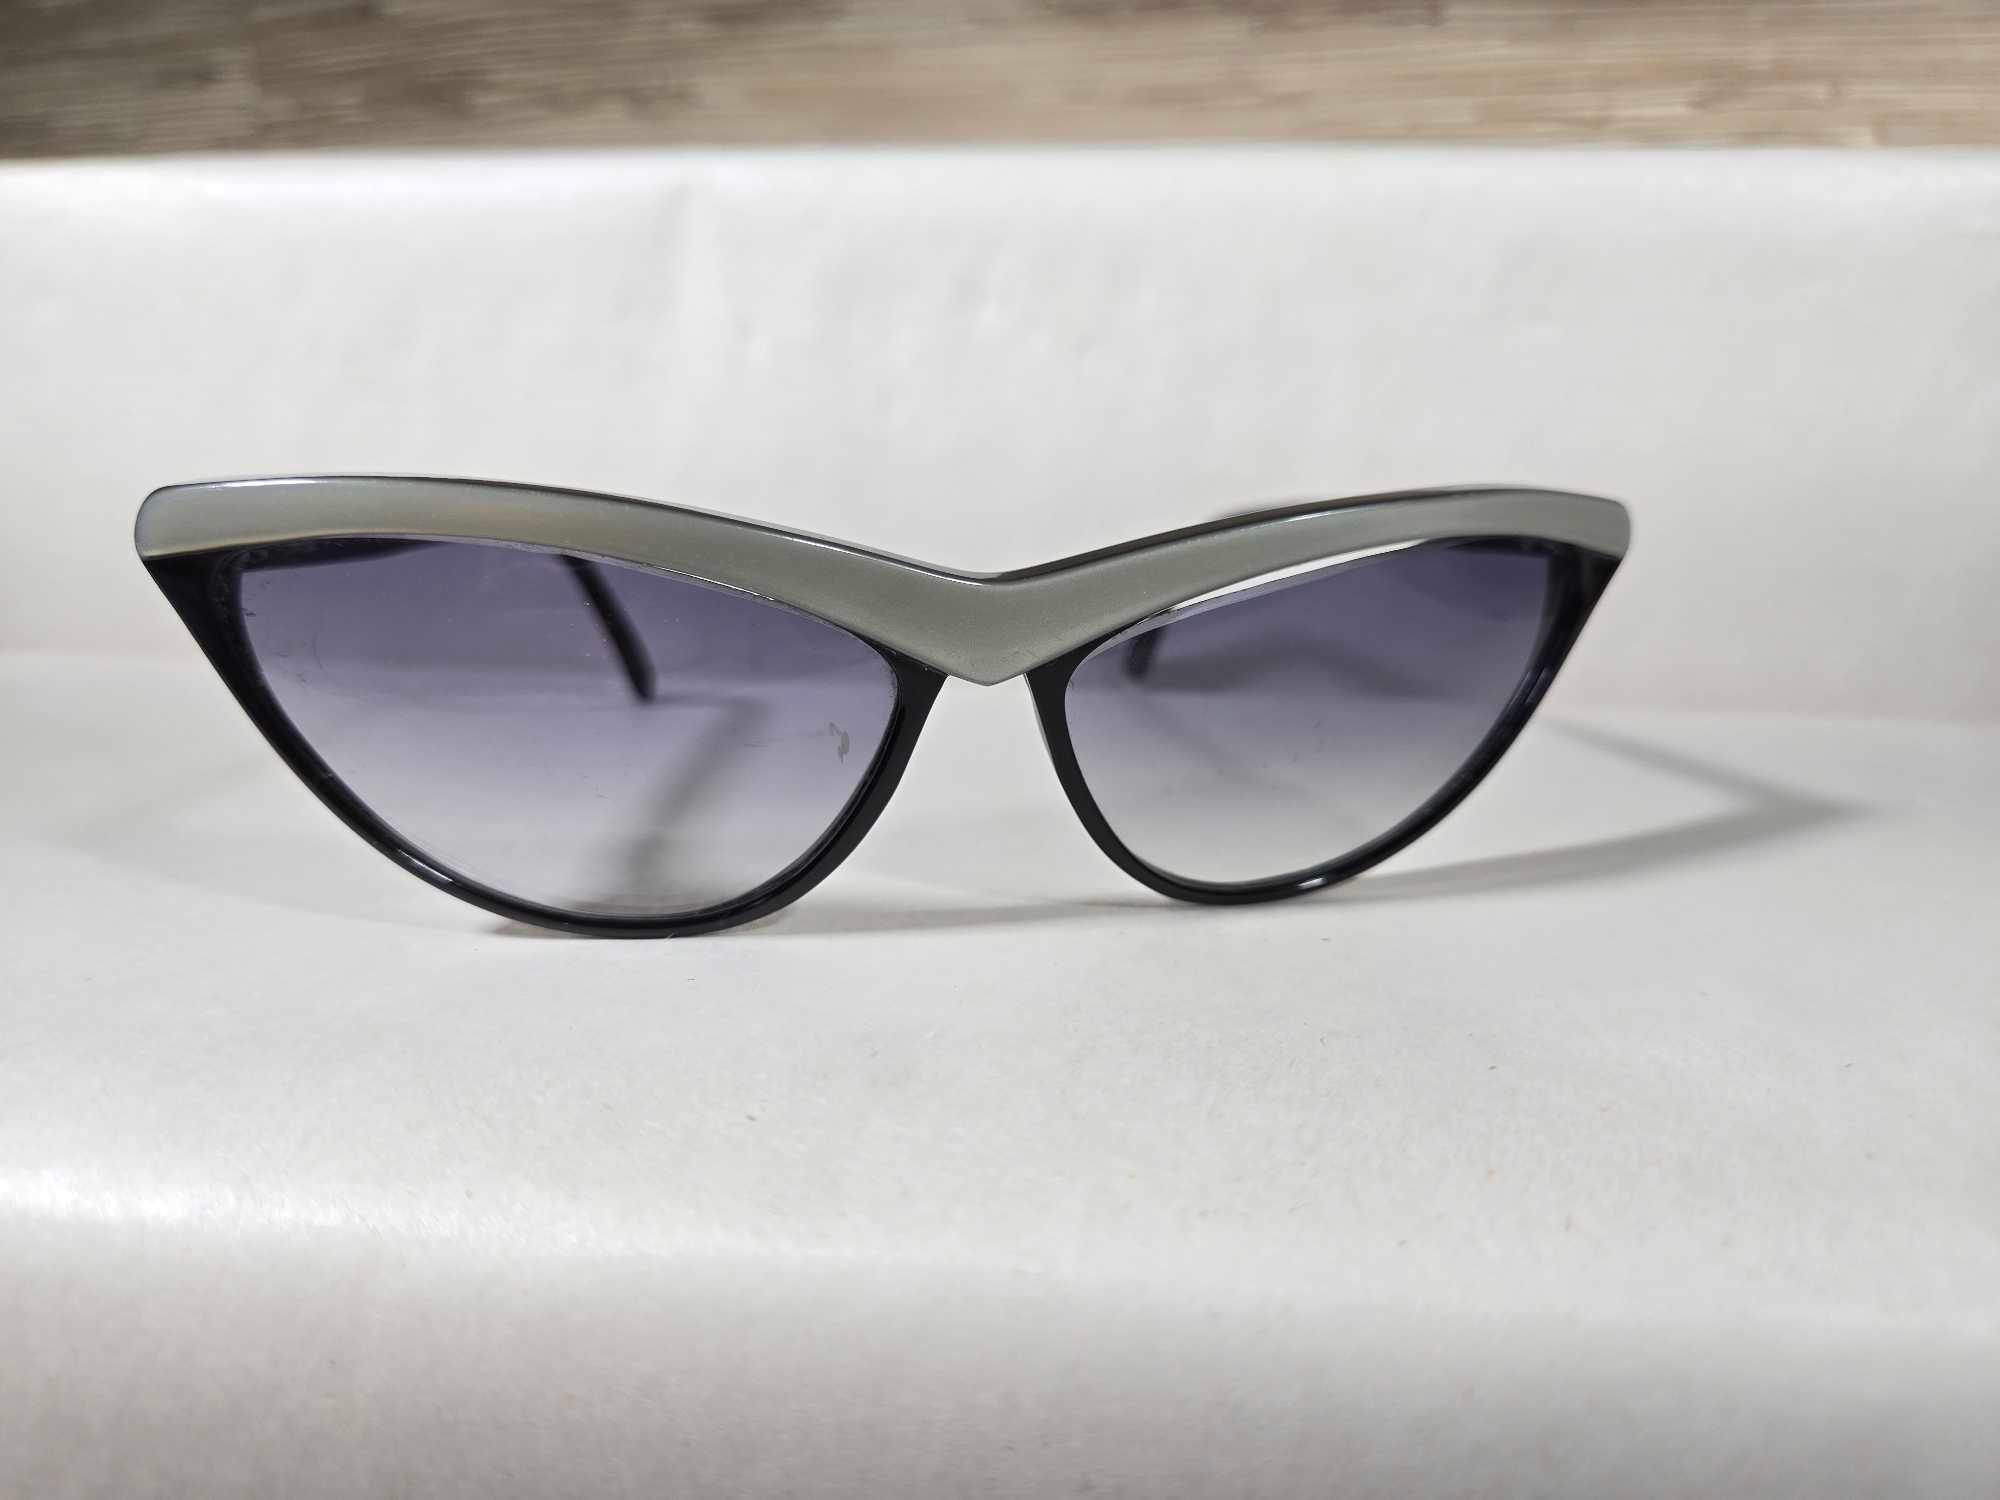 4 Pair of Vintage Women's Sunglasses incl. Oleg Cassini & More